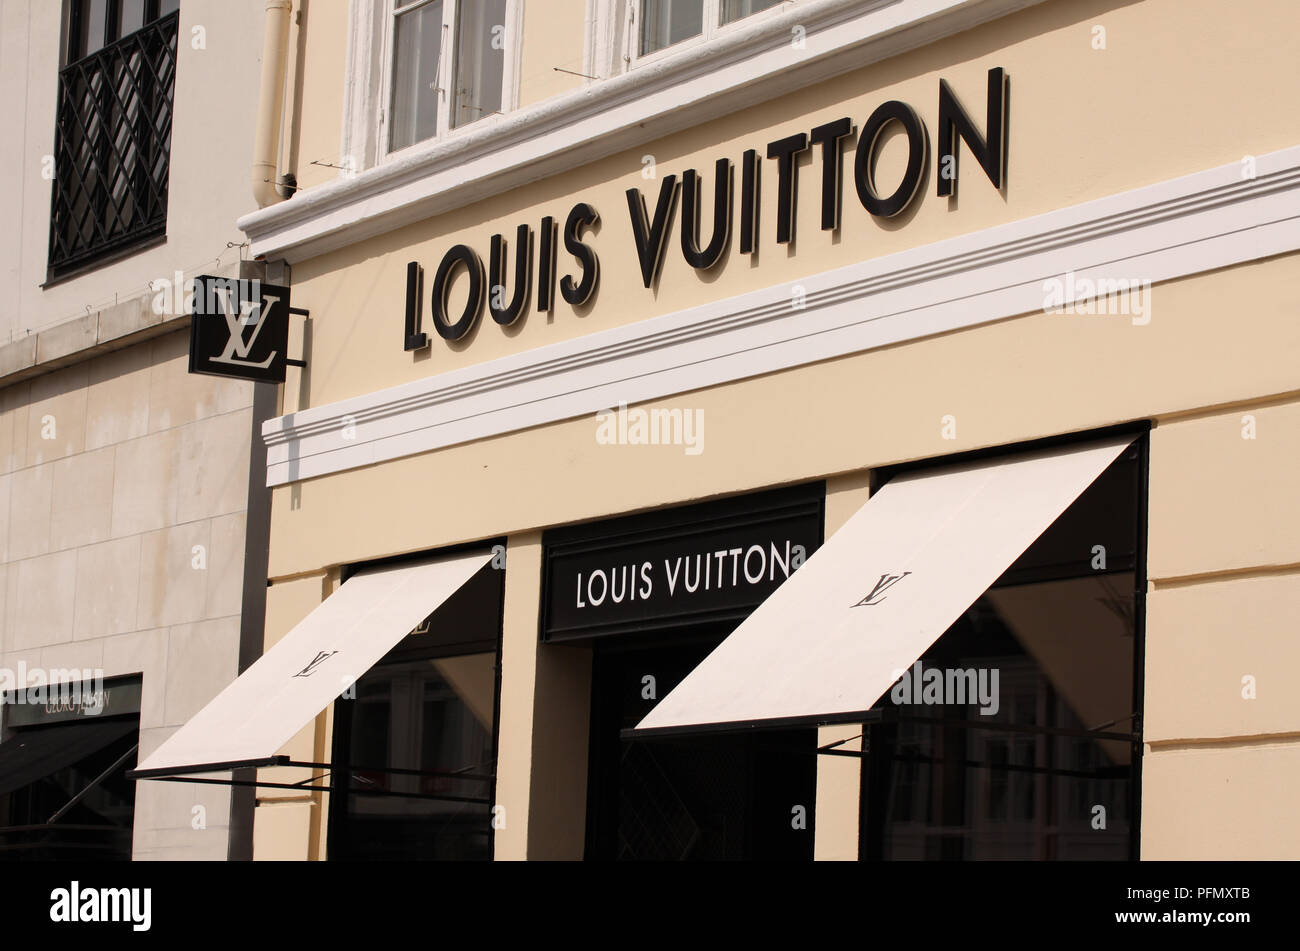 uddøde Fradrage hestekræfter Louis Vuitton Logo High Resolution Stock Photography and Images - Alamy